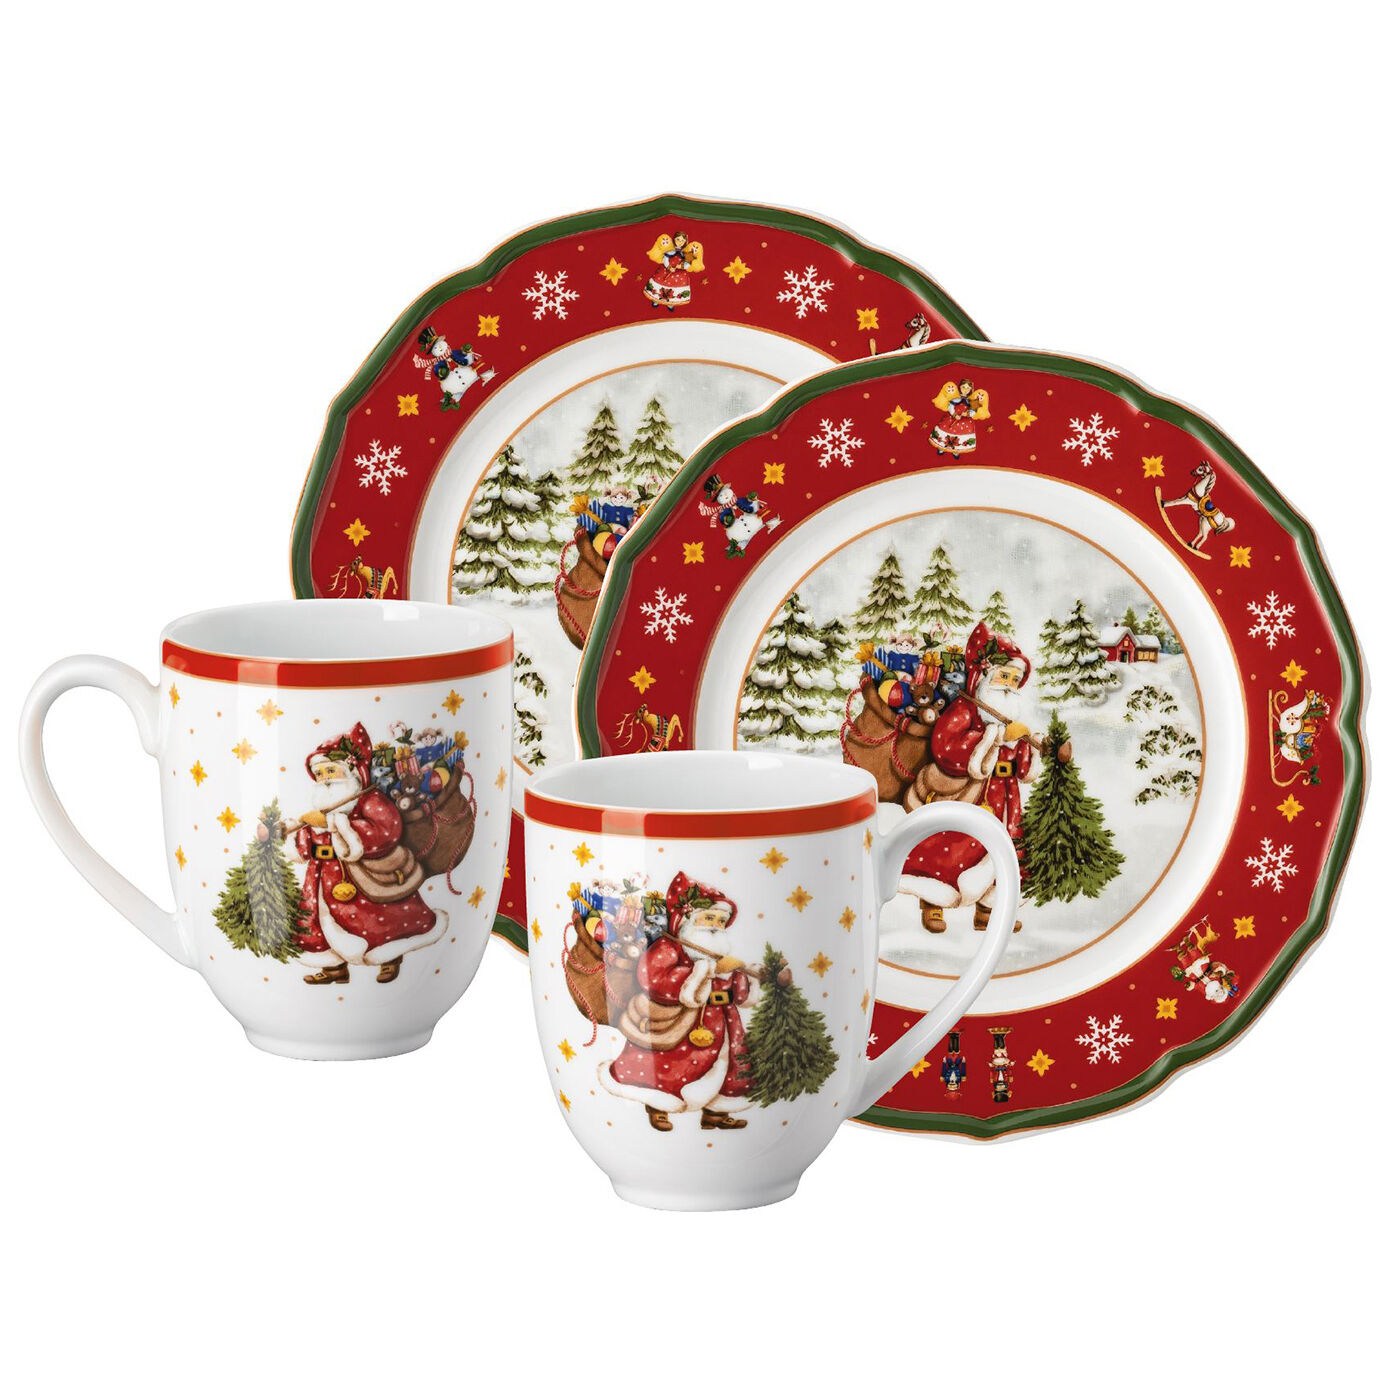 Dinnerware & Gift Sets | Hutschenreuther Porcelain Online Shop